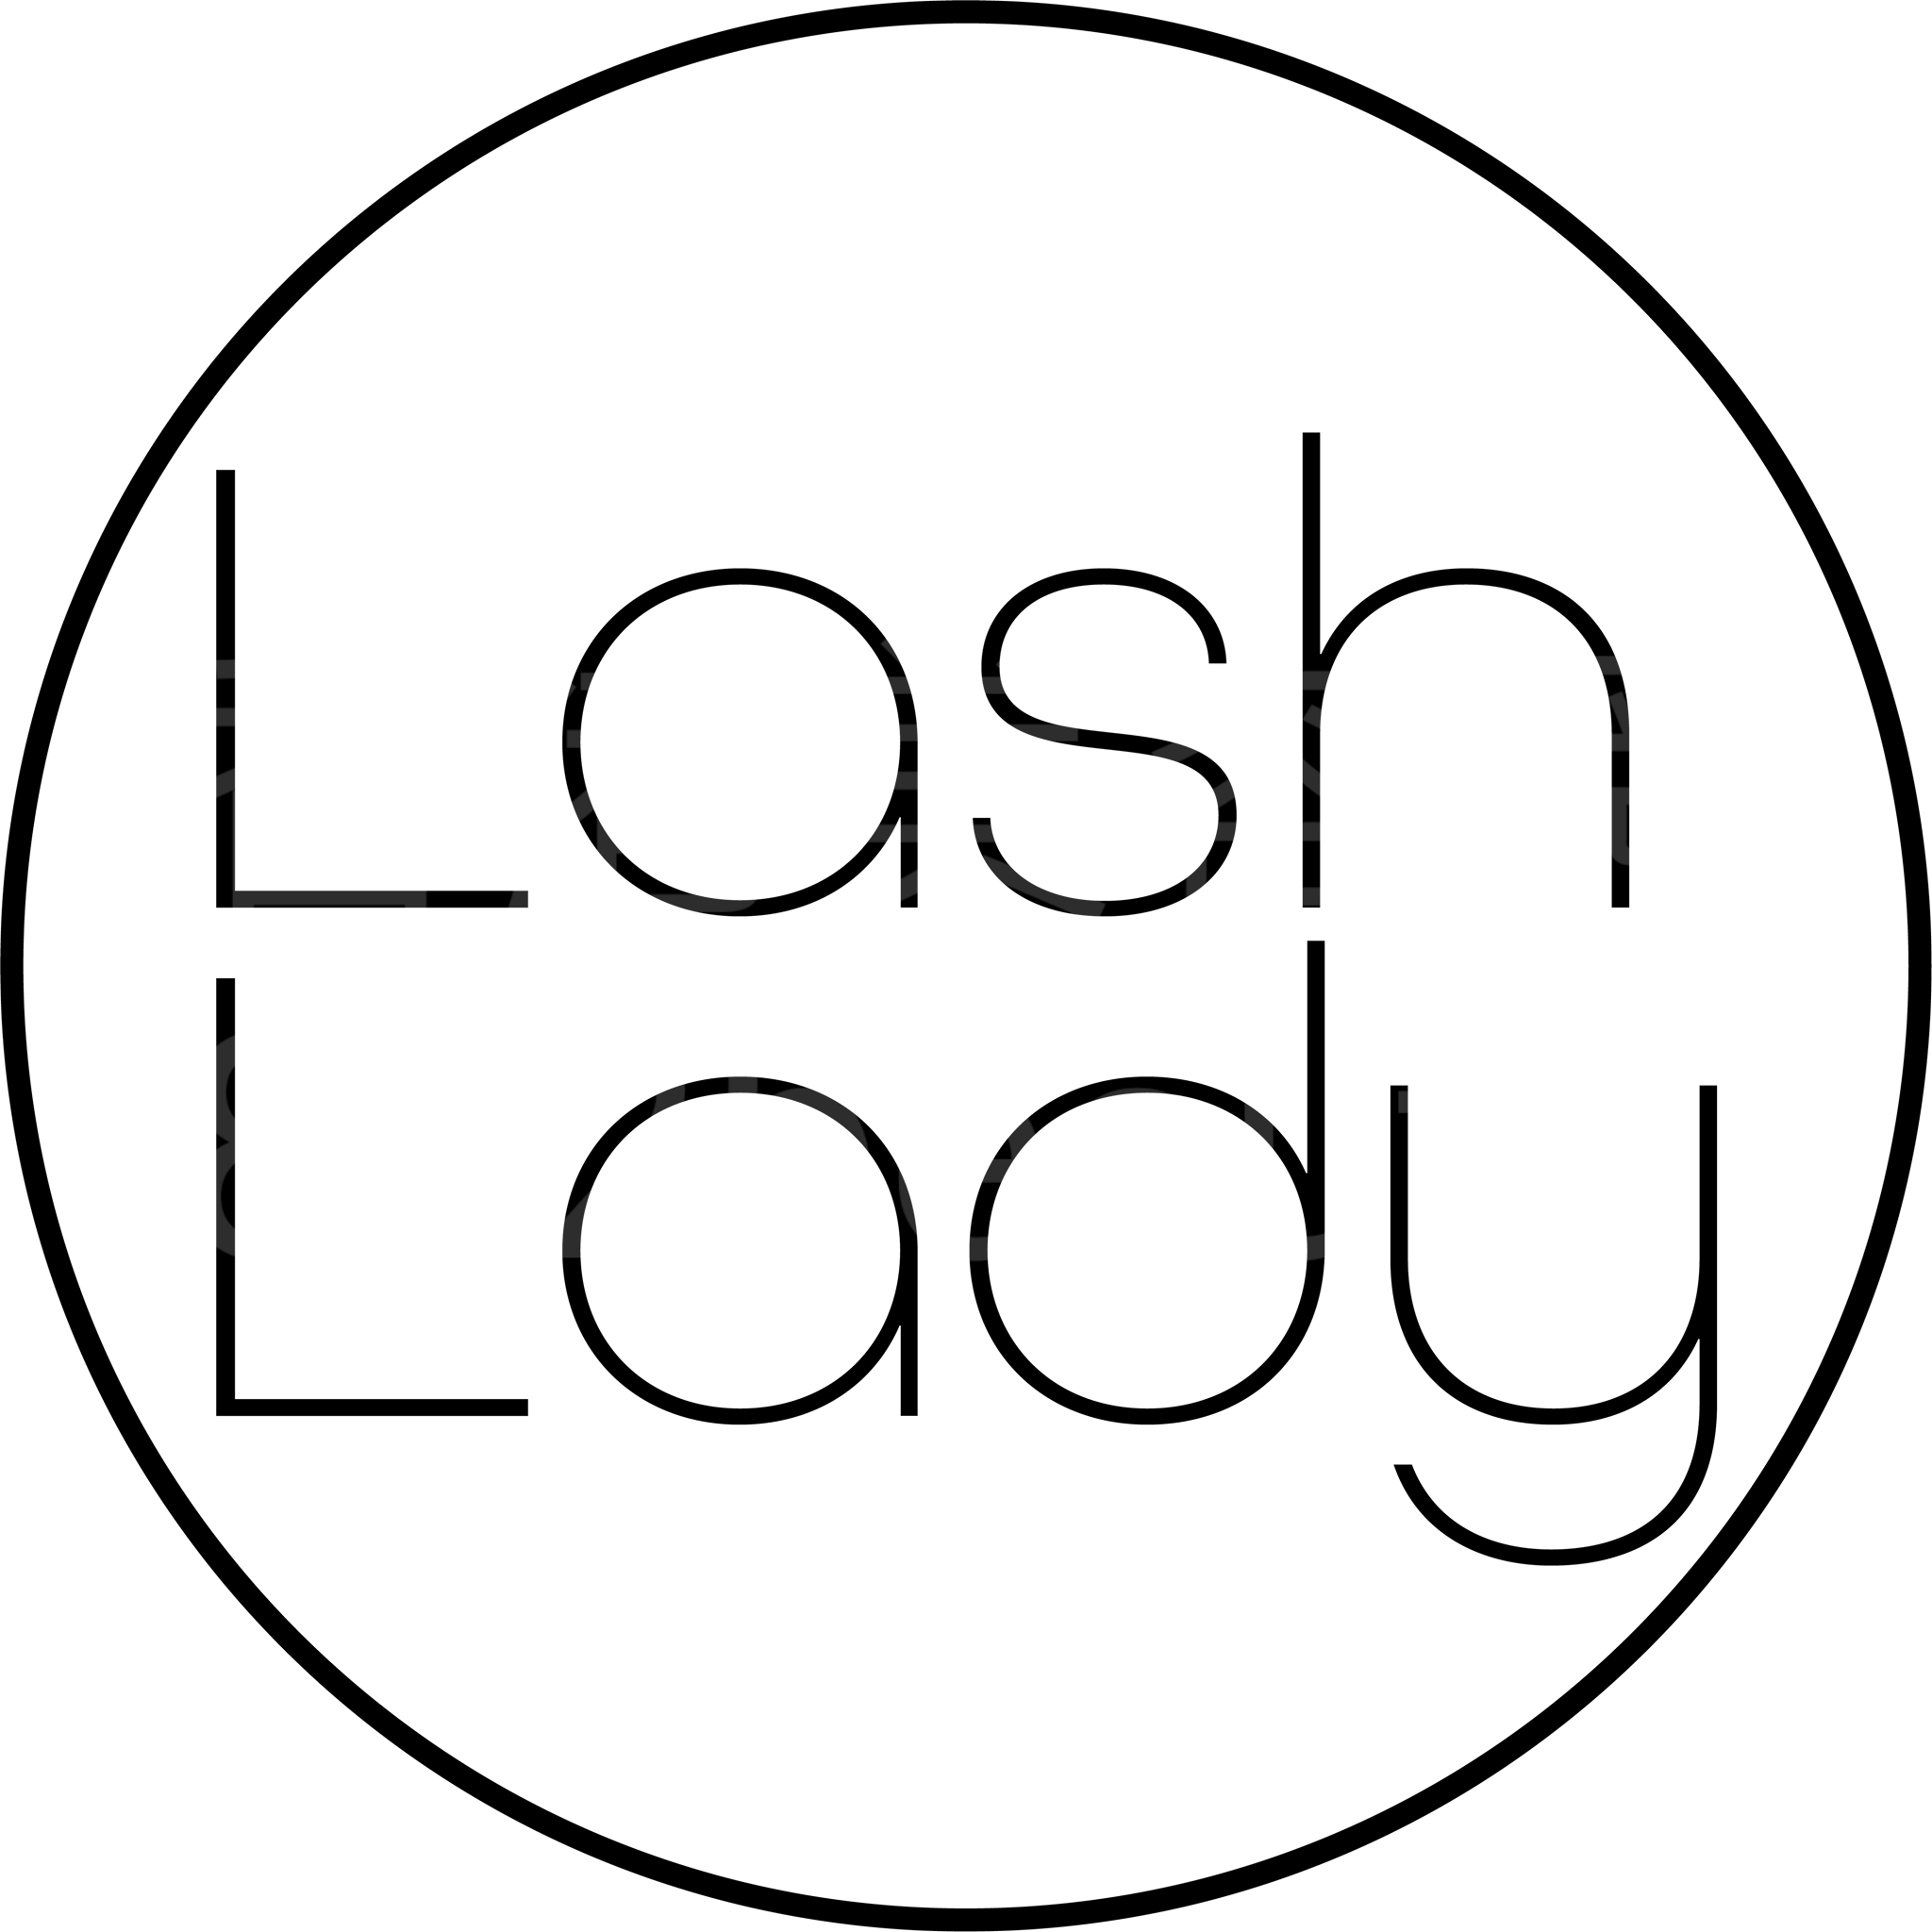 美容院 Beauty Salon: Lash Lady